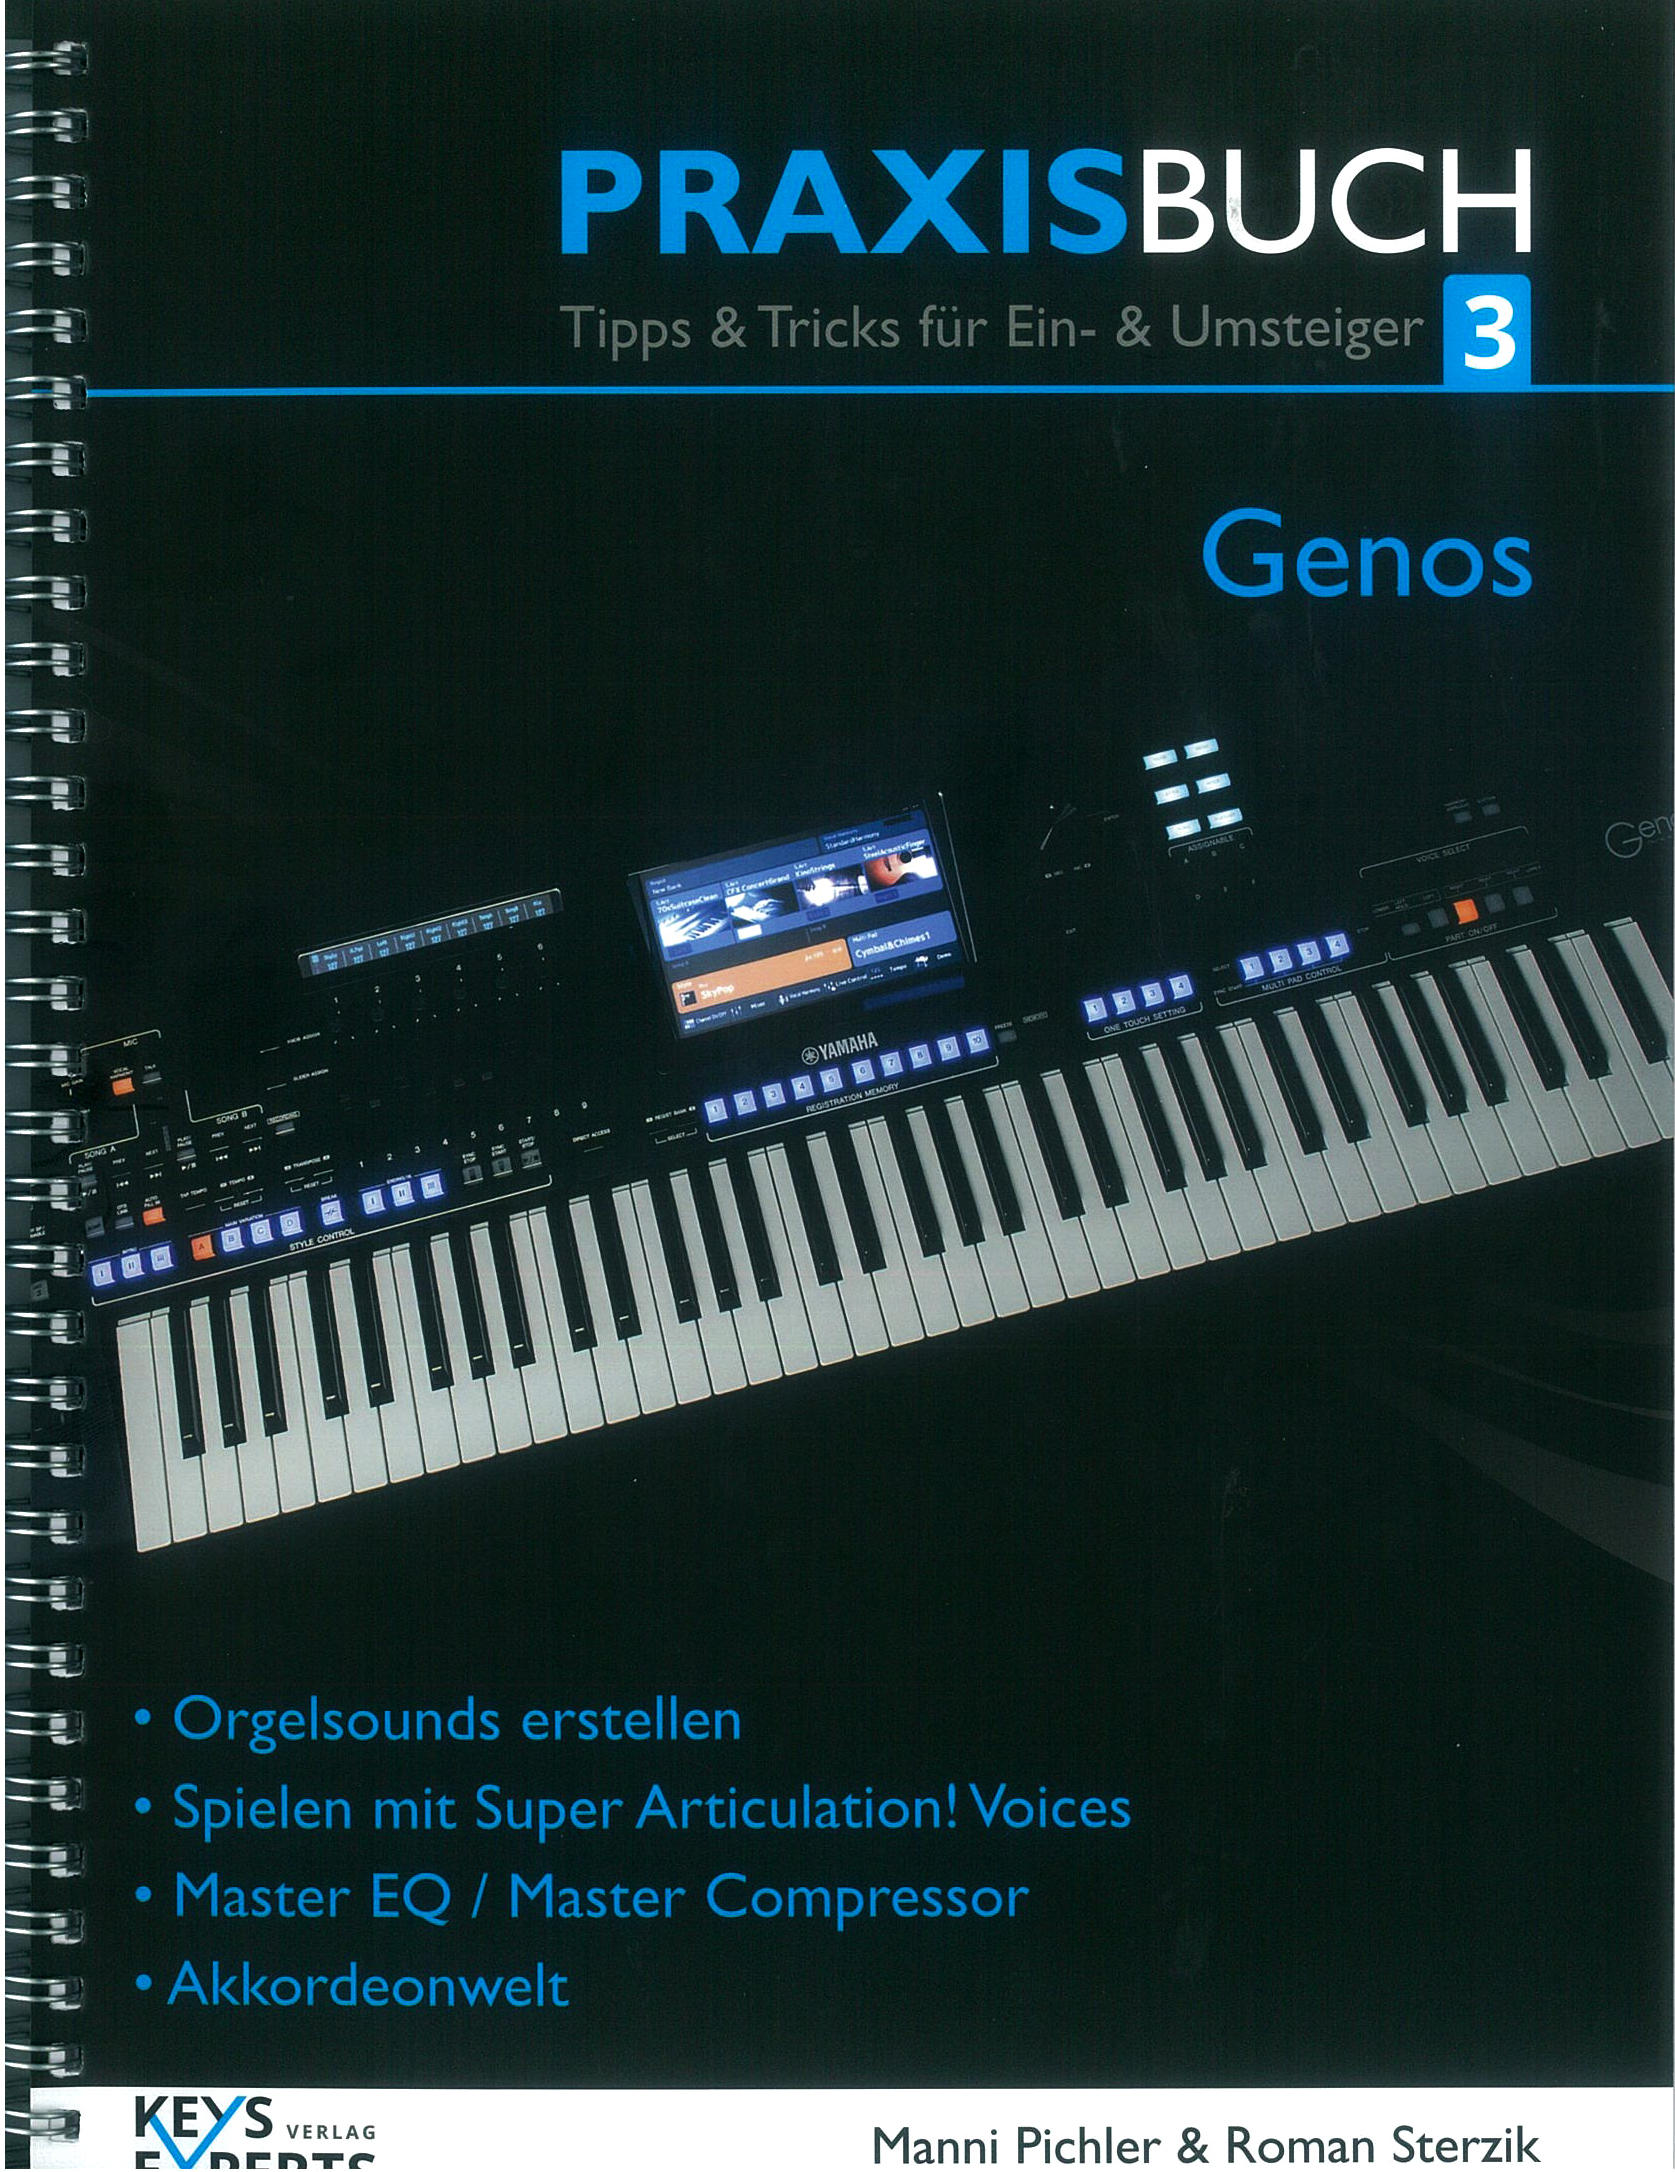 Keys Experts Praxisbuch für Genos Teil 3